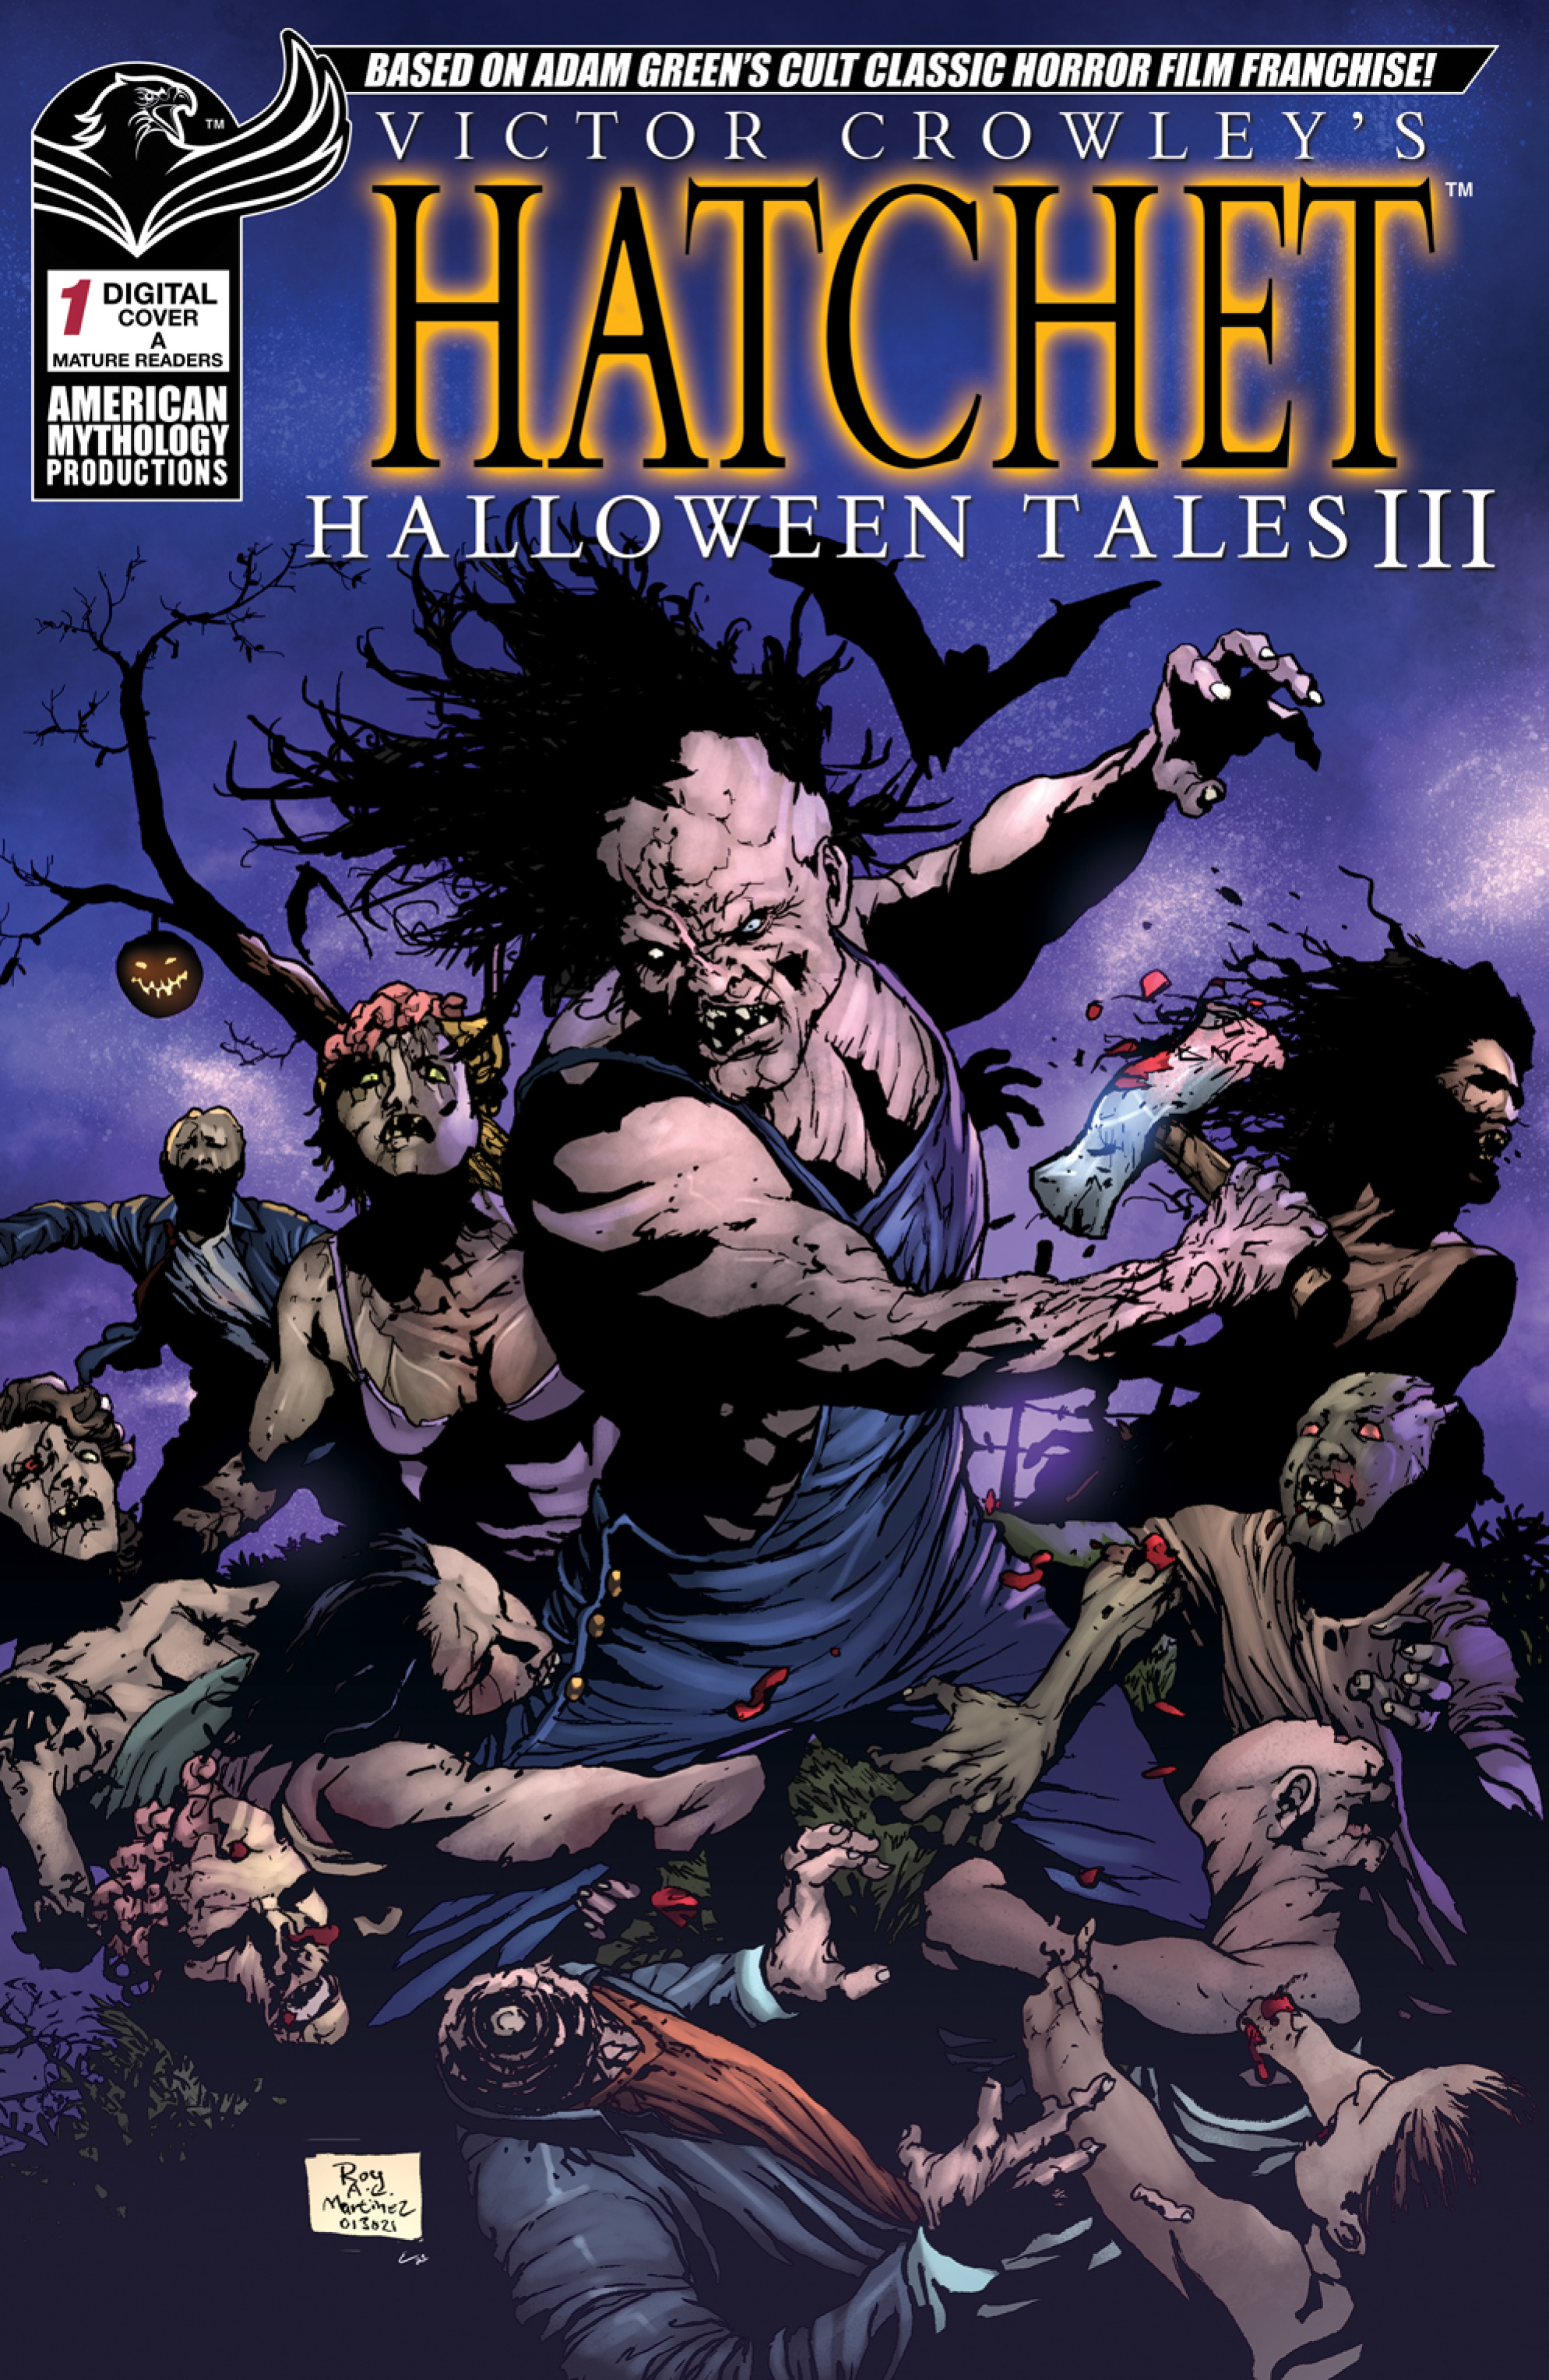 Read online Victor Crowley's Hatchet Halloween Tales III comic -  Issue # Full - 1